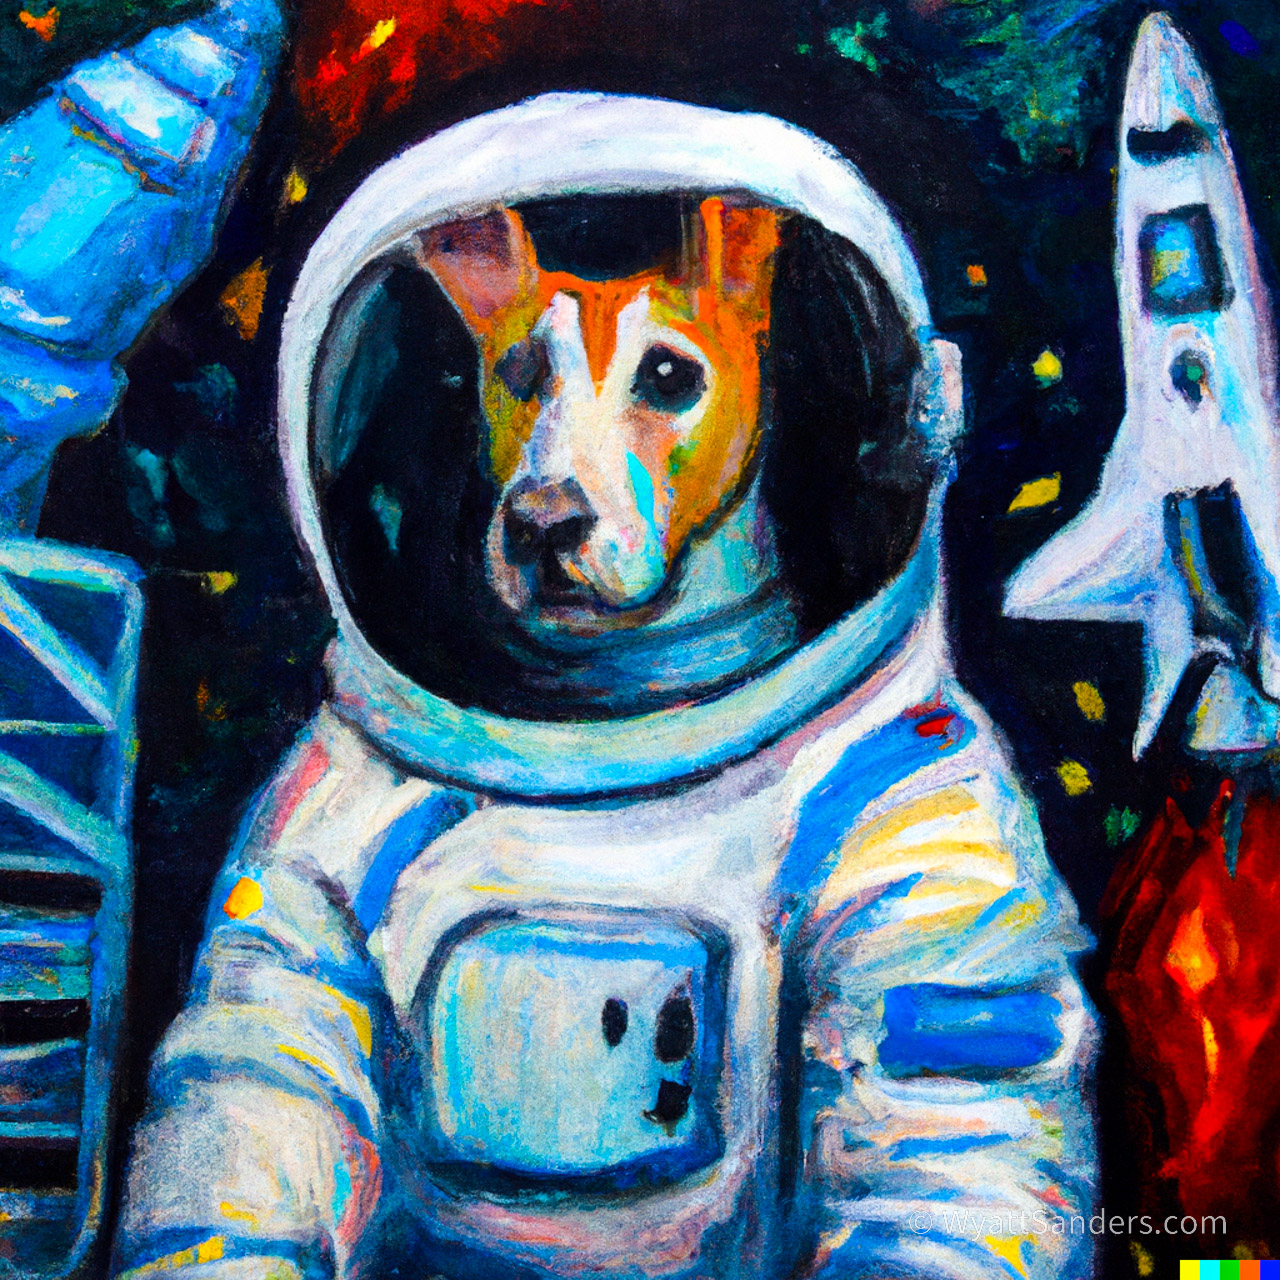 Laika the rocket dog